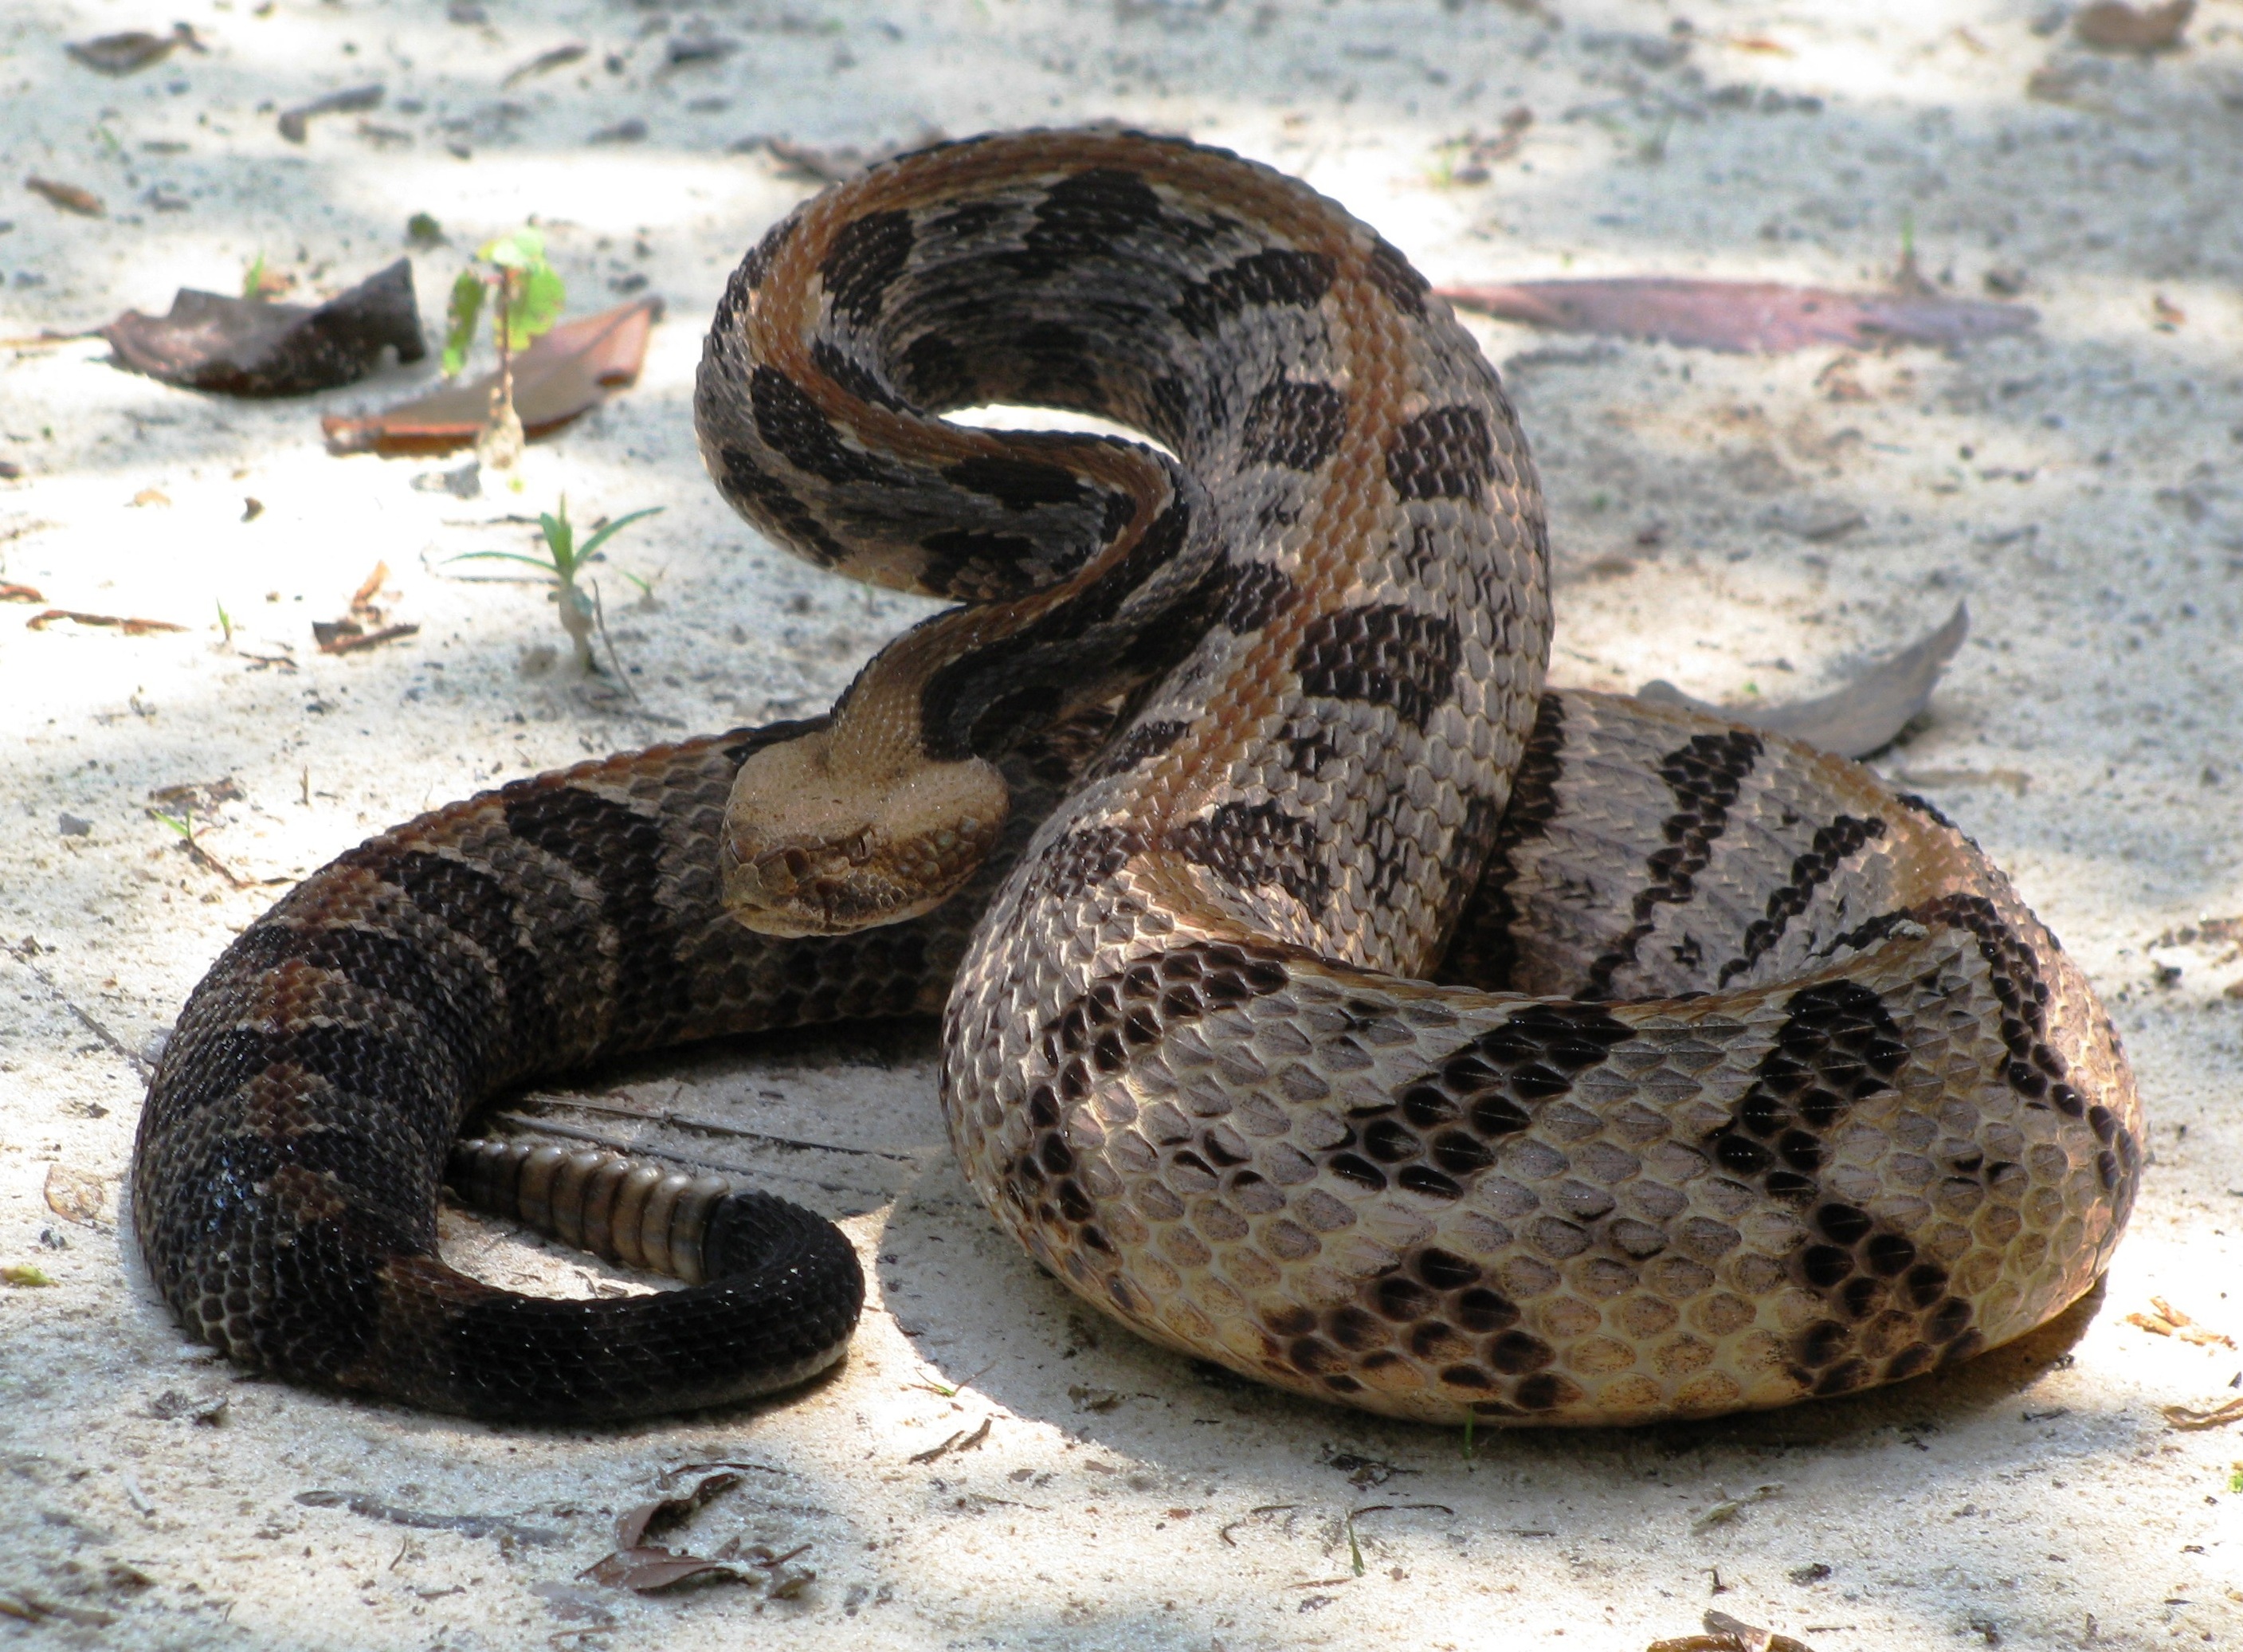 Venomous Snakes - Snakes Alive